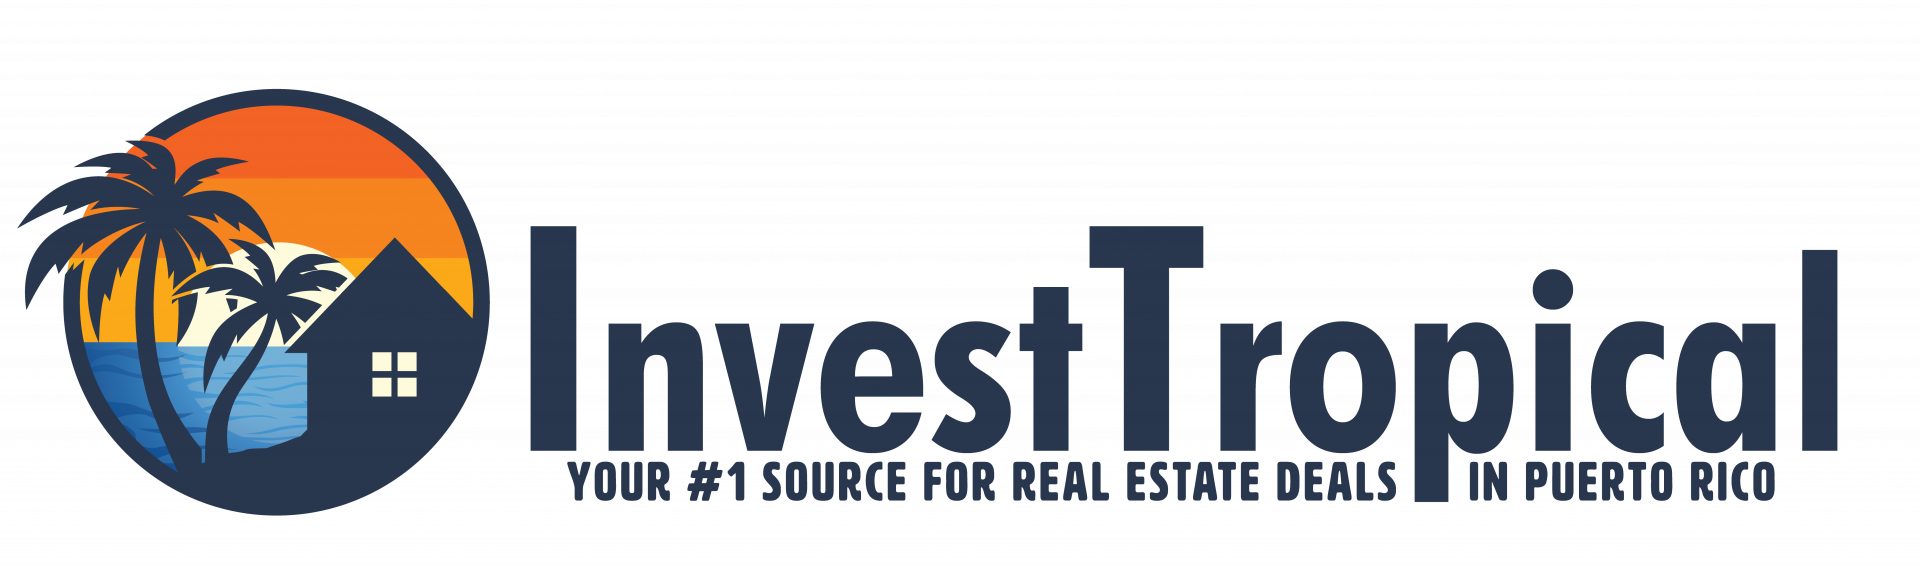 Invest Tropical logo